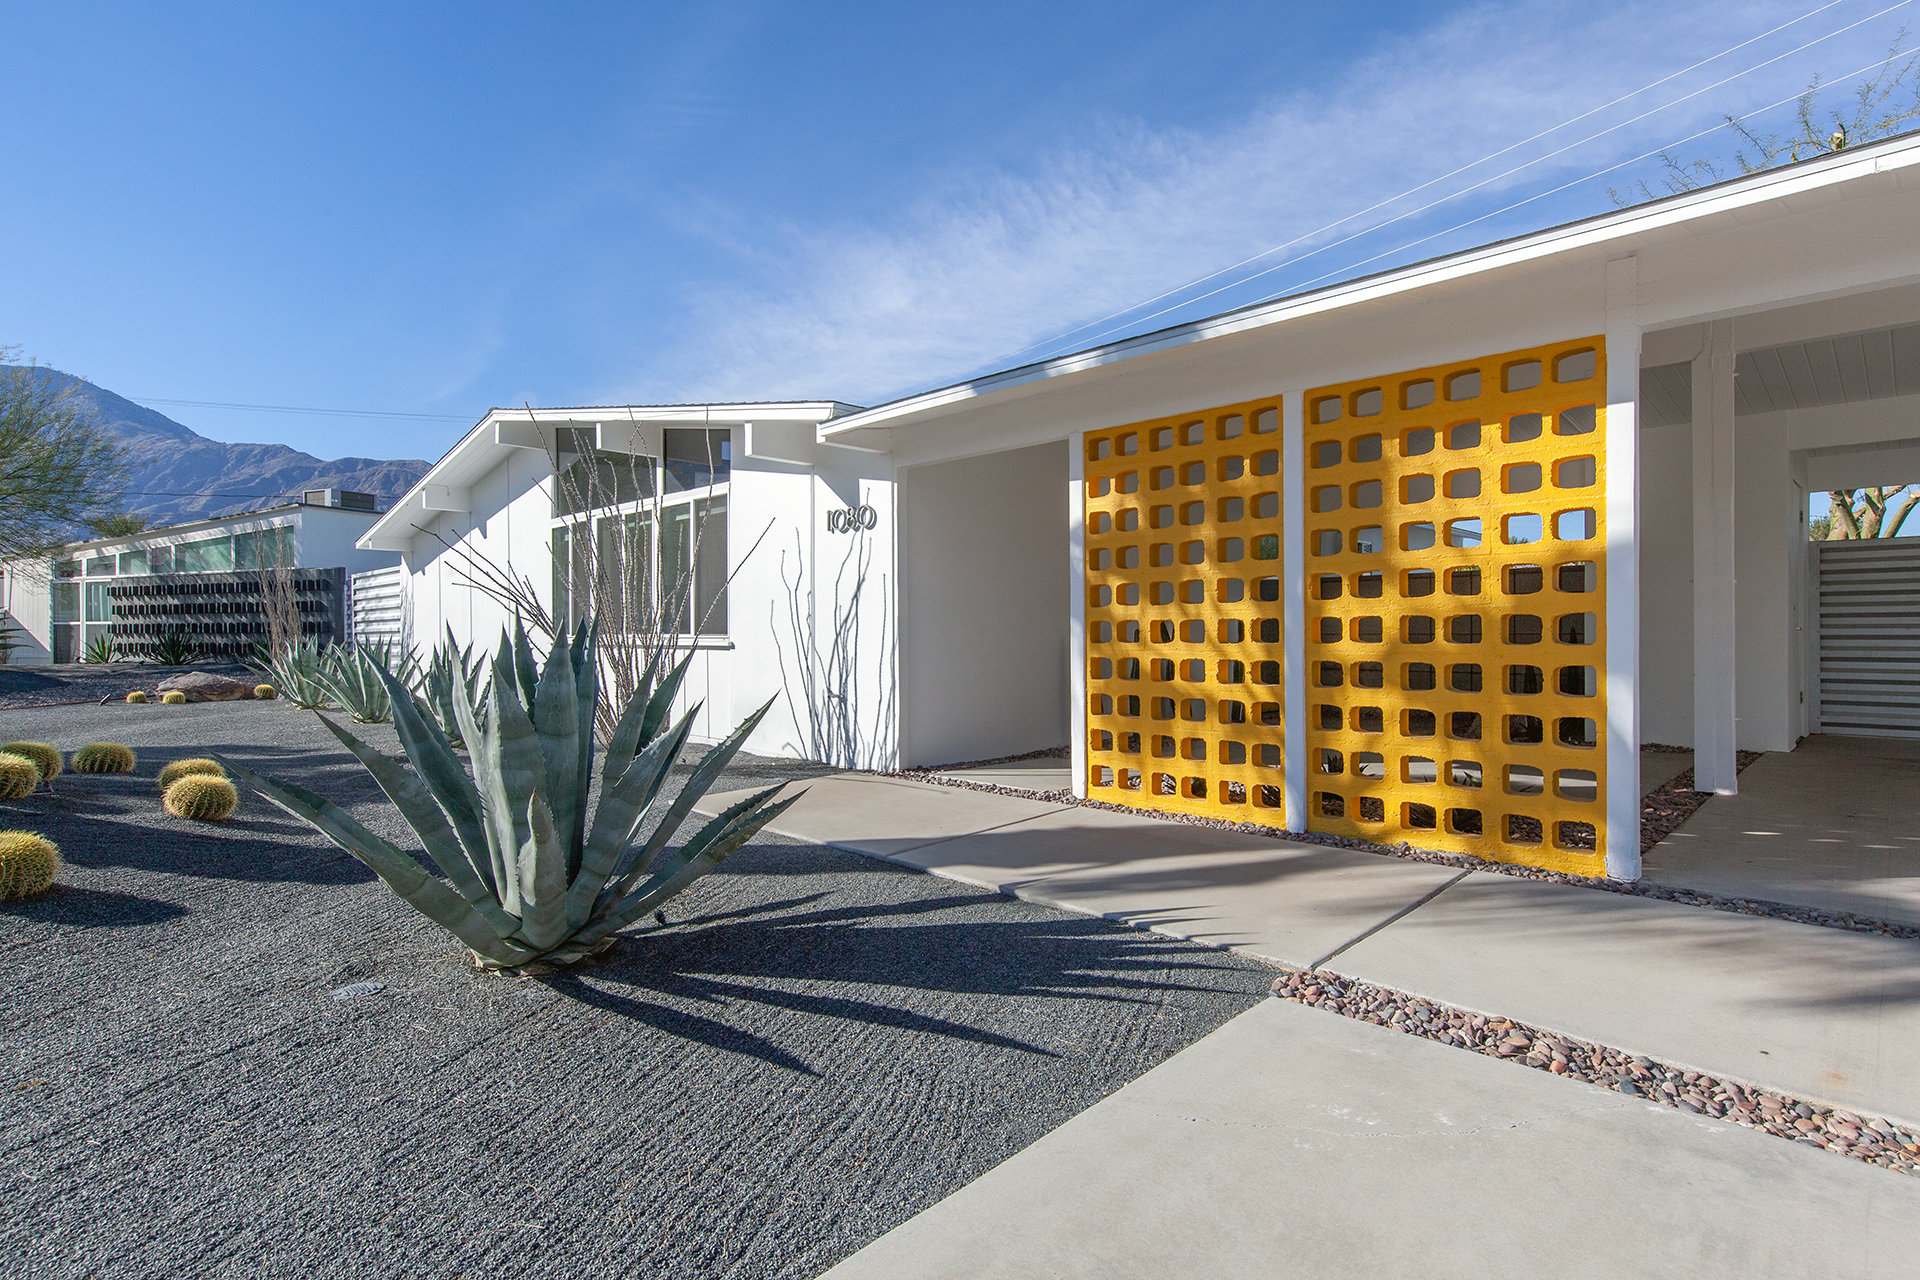 An Alexander built home in Racquet Club Estates in Palm Springs, CA.